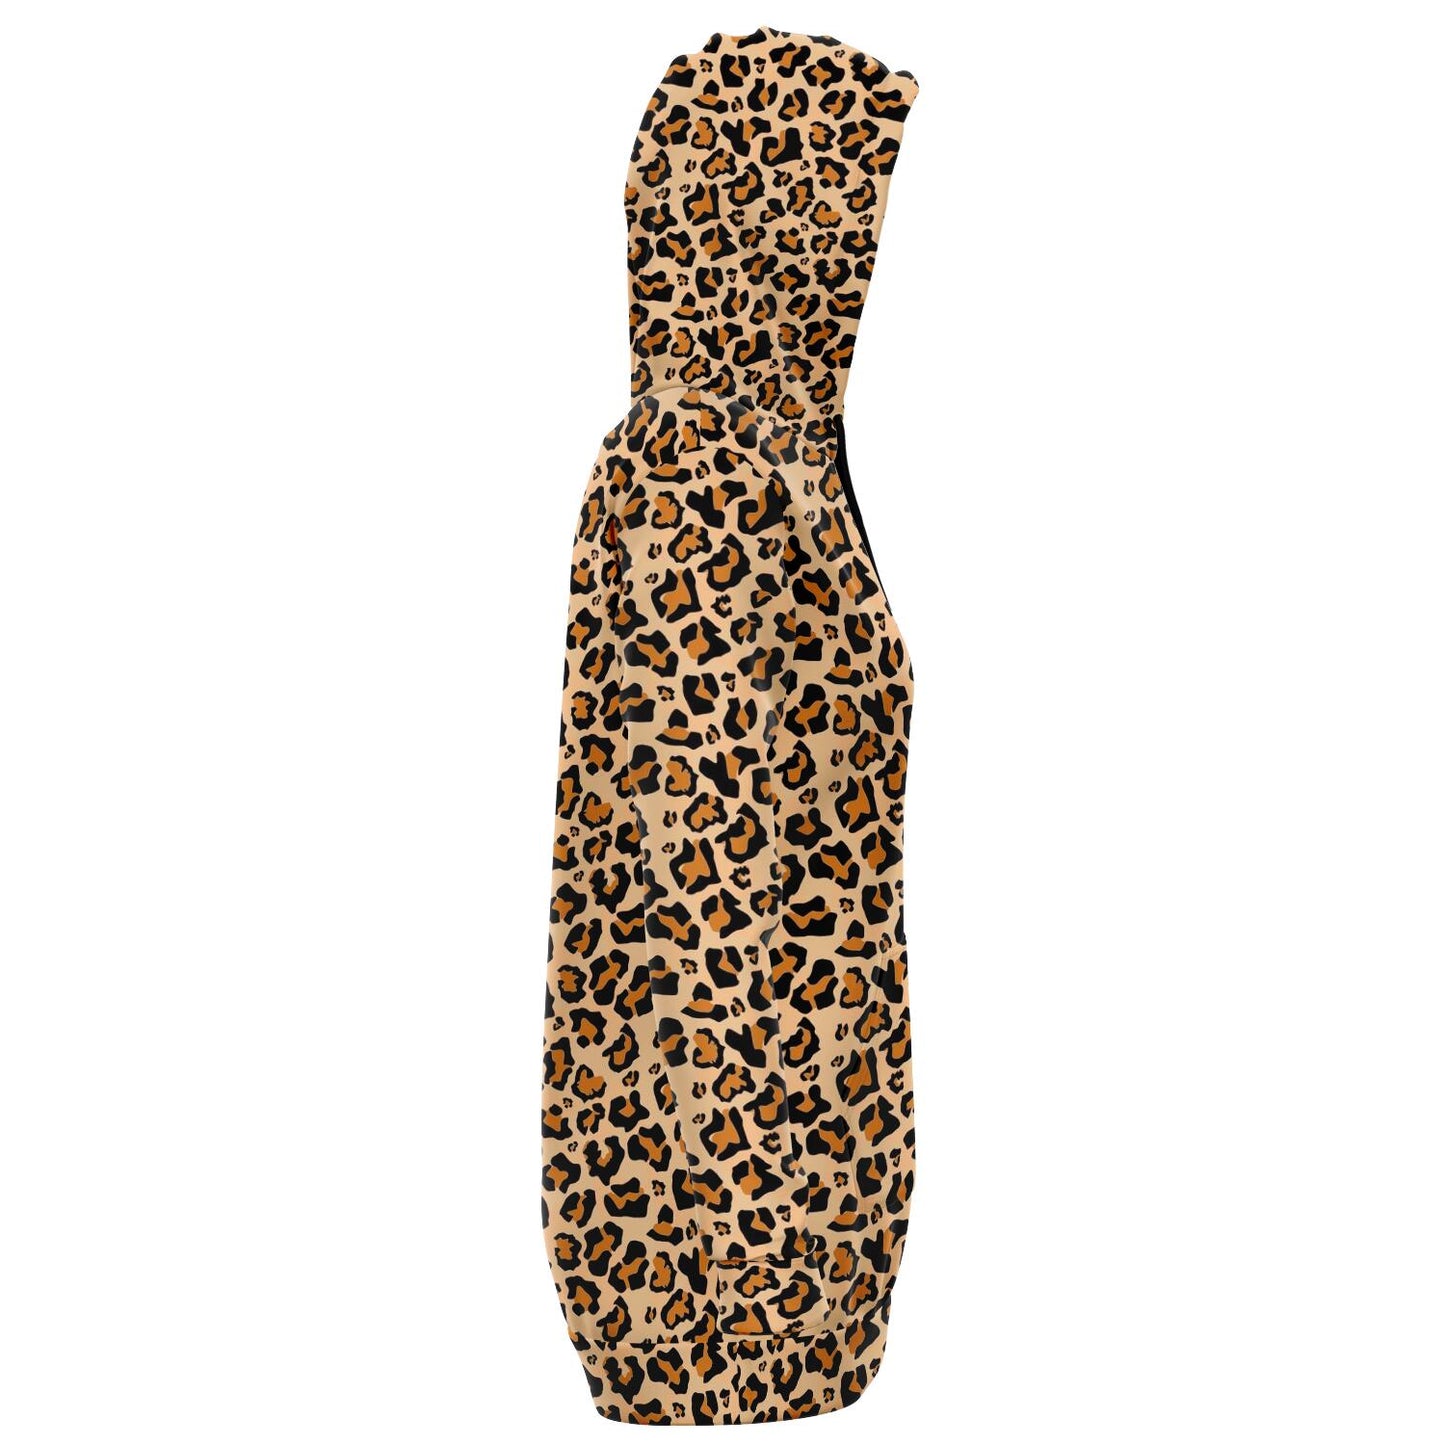 Leopard Hoodie Dress, Animal Print Cheetah Long Sleeve Sexy Winter Hooded Sweatshirt Dress with Pockets Starcove Fashion